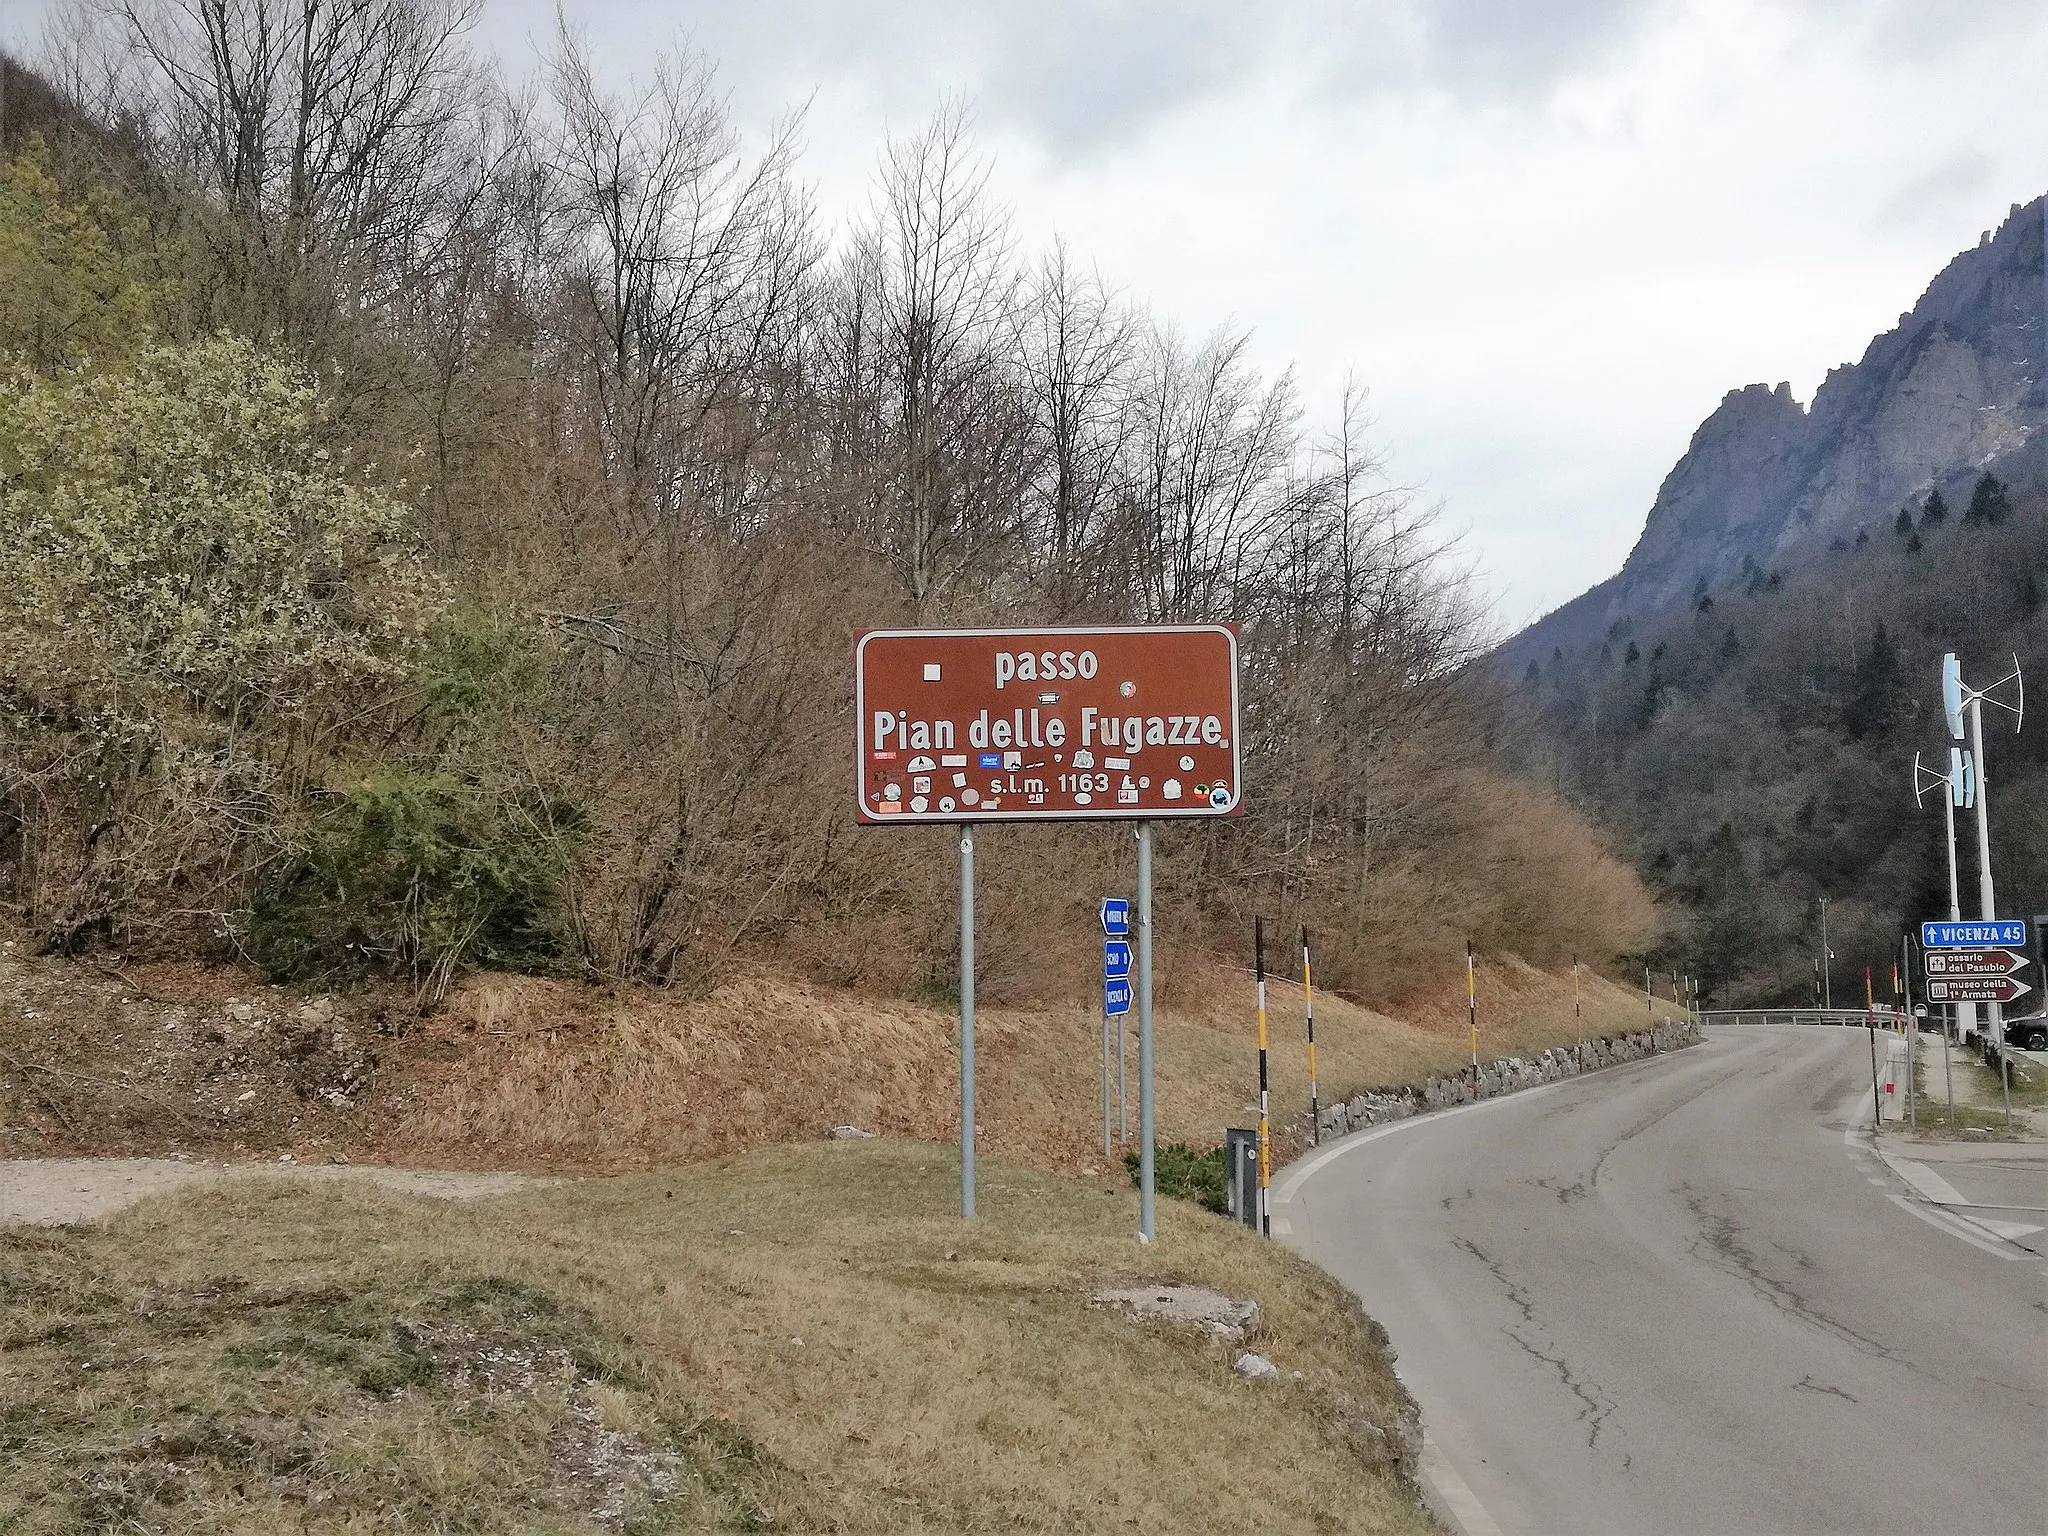 Photo showing: Pass Pian delle Fugazze